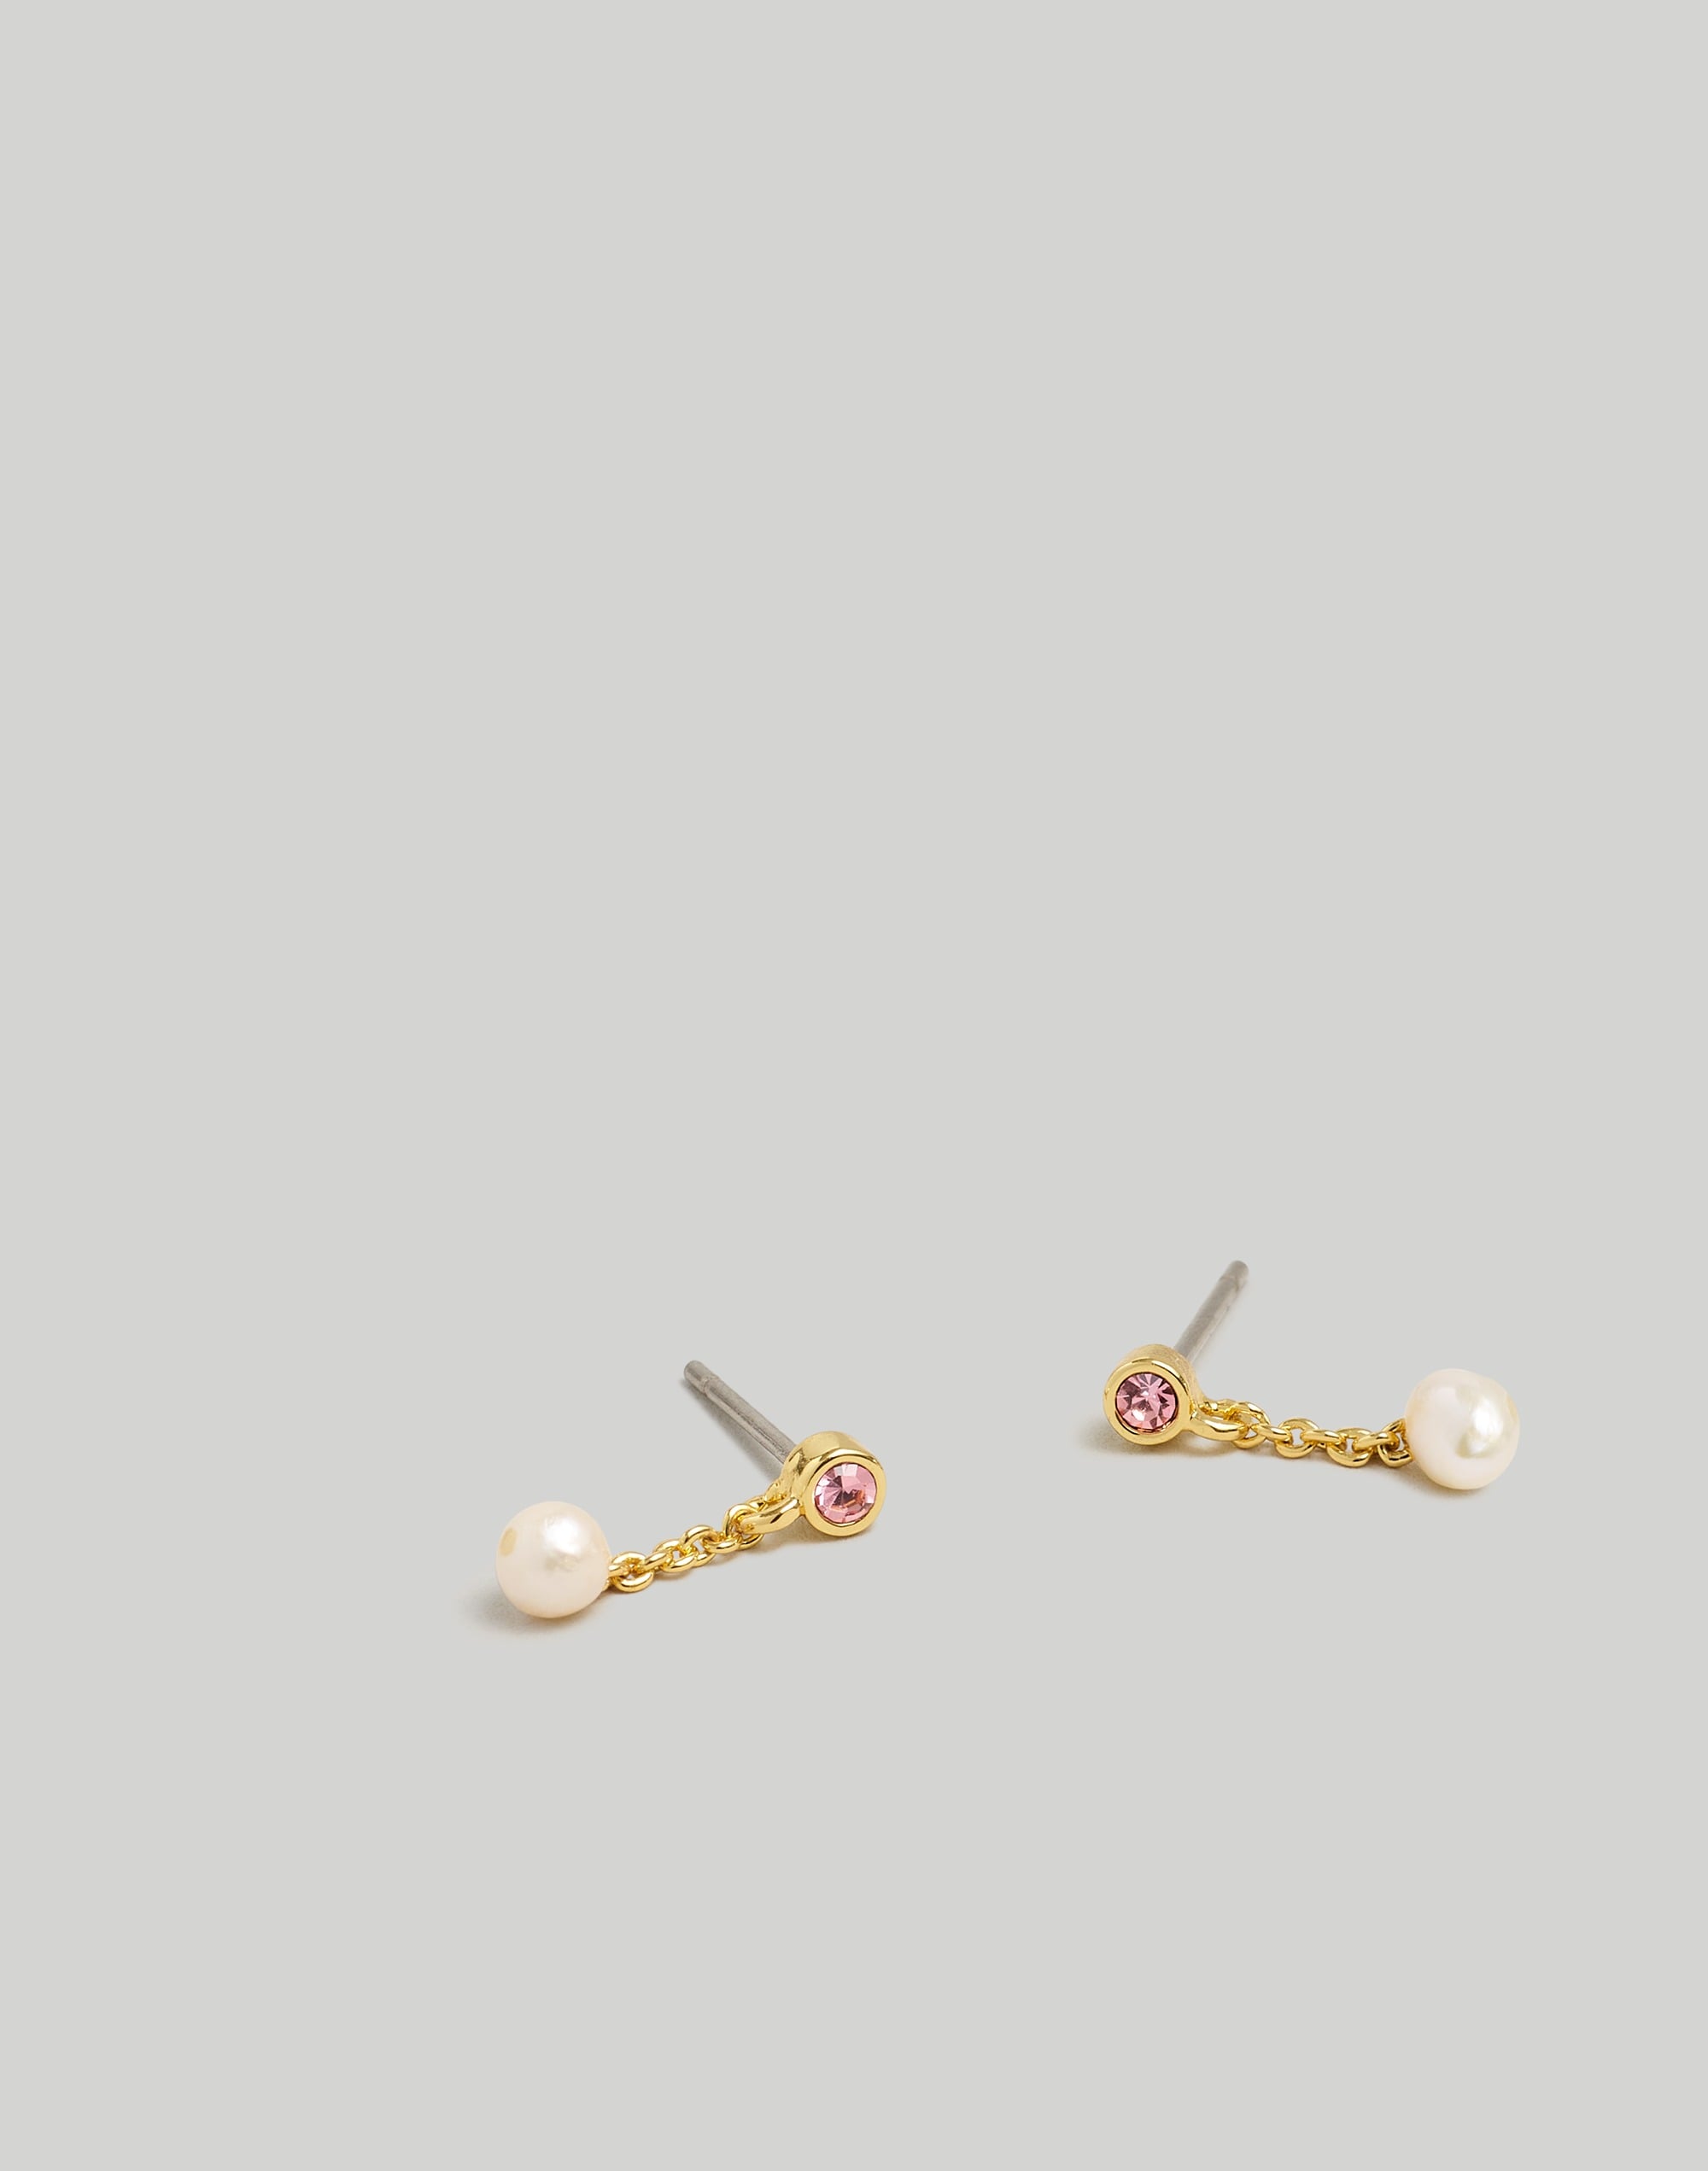 Freshwater Pearl Drop Earrings